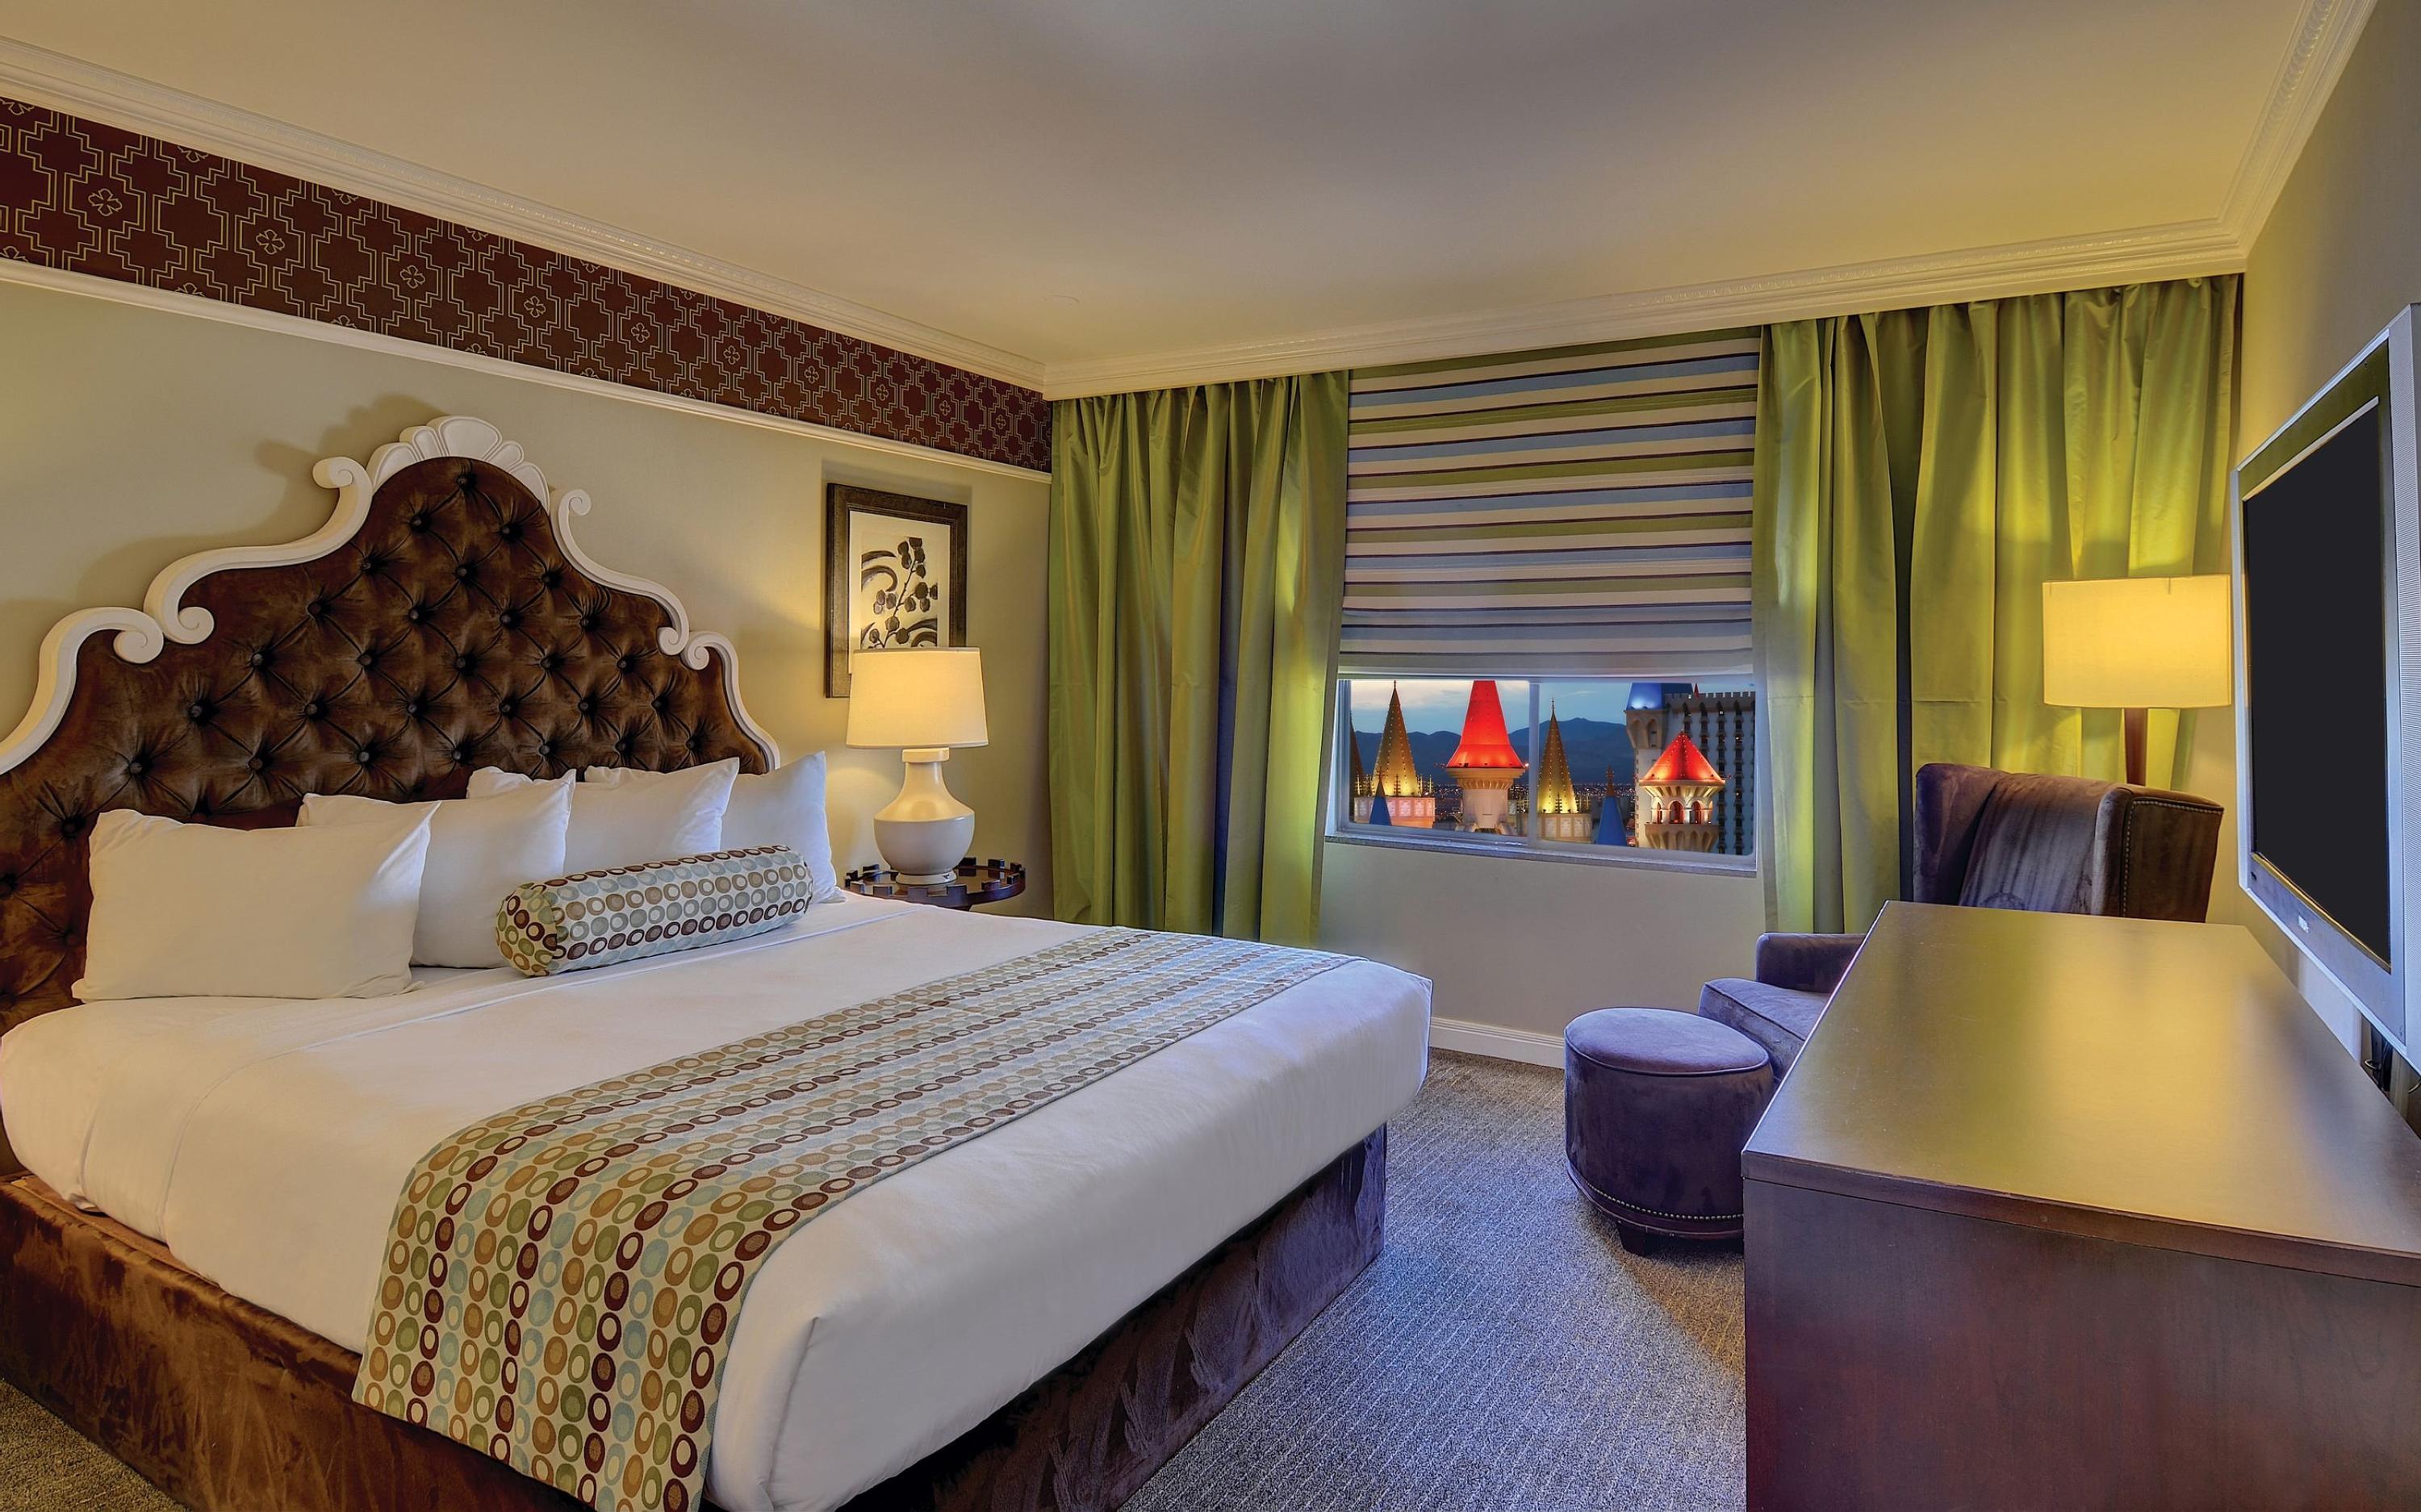 Las Vegas Paris Hotel room tour 🥐 #roomtour #hotelroom #lasvegas #bla, Luxury Room Tour